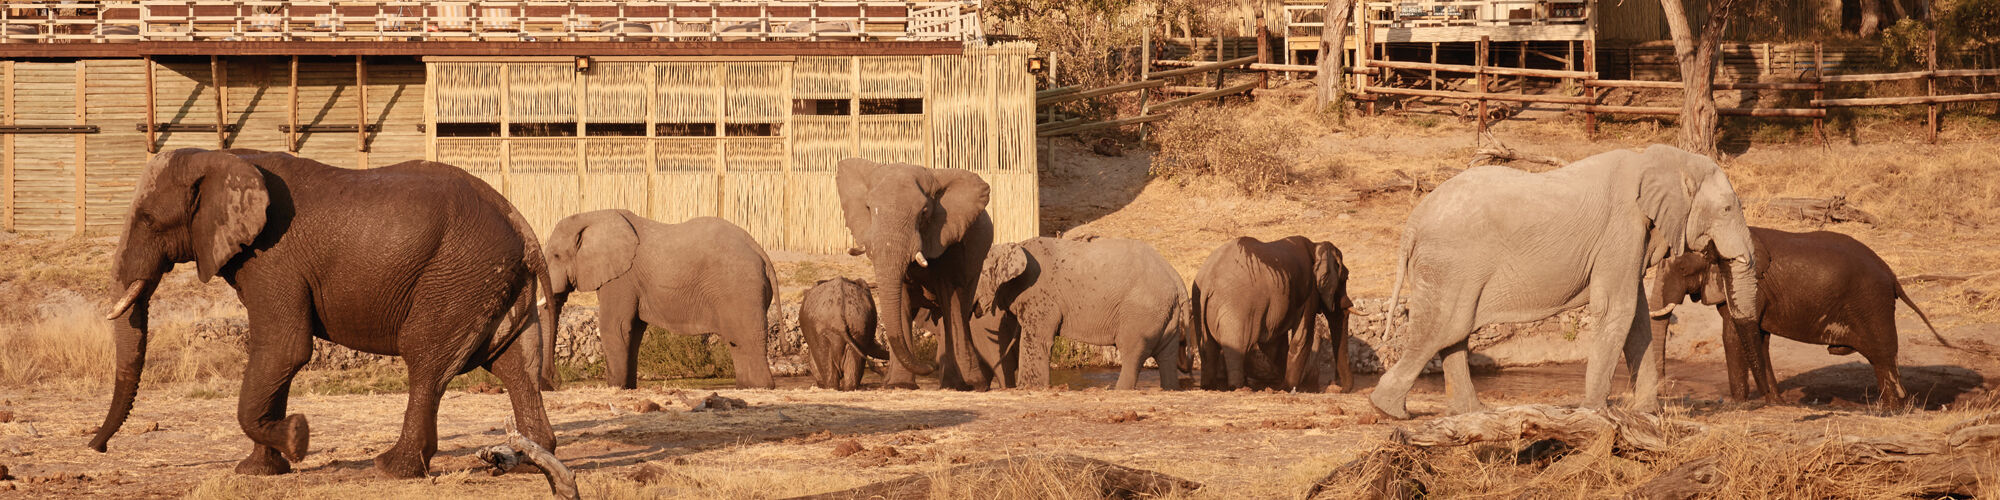 Savute Elephant Camp, banner